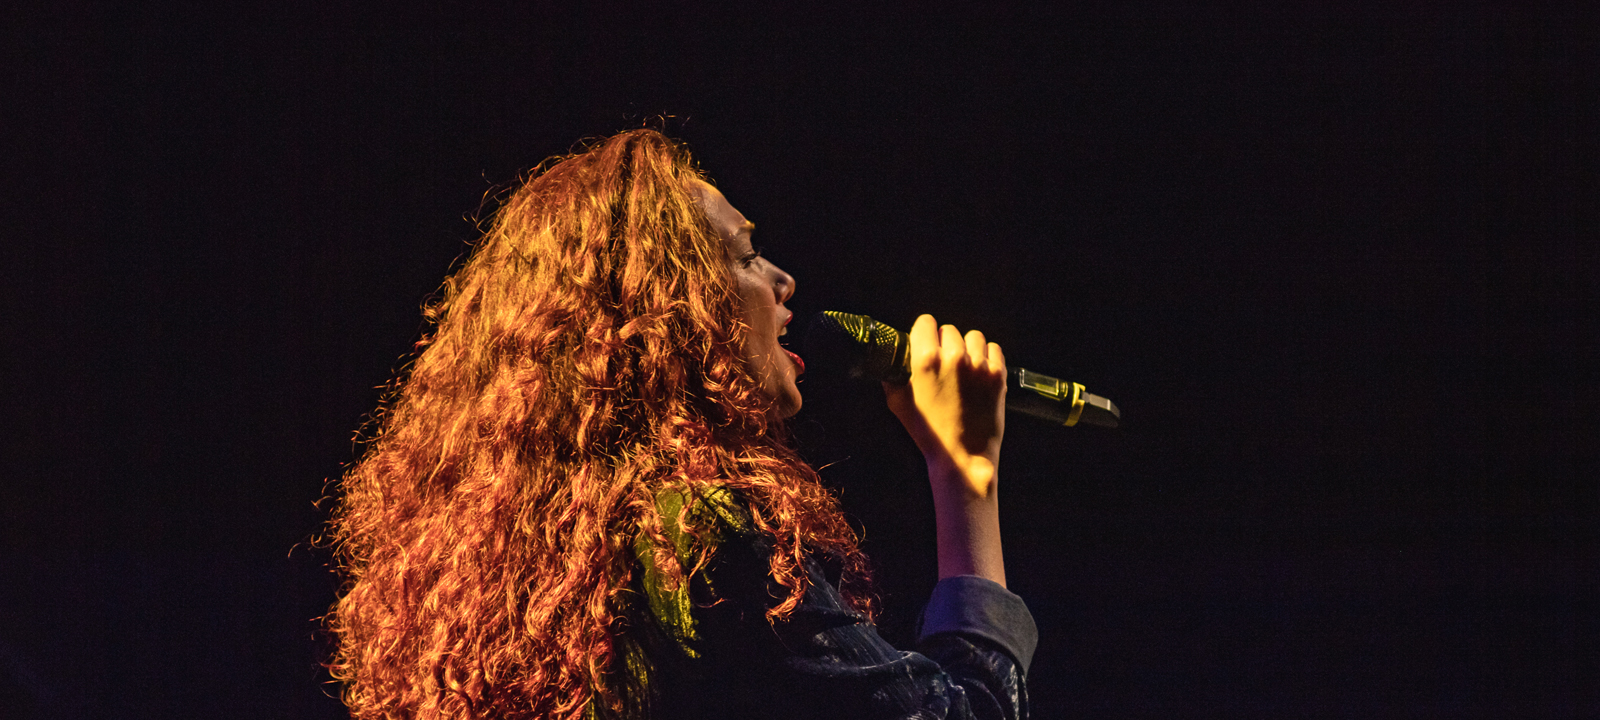 female performer singing on stage